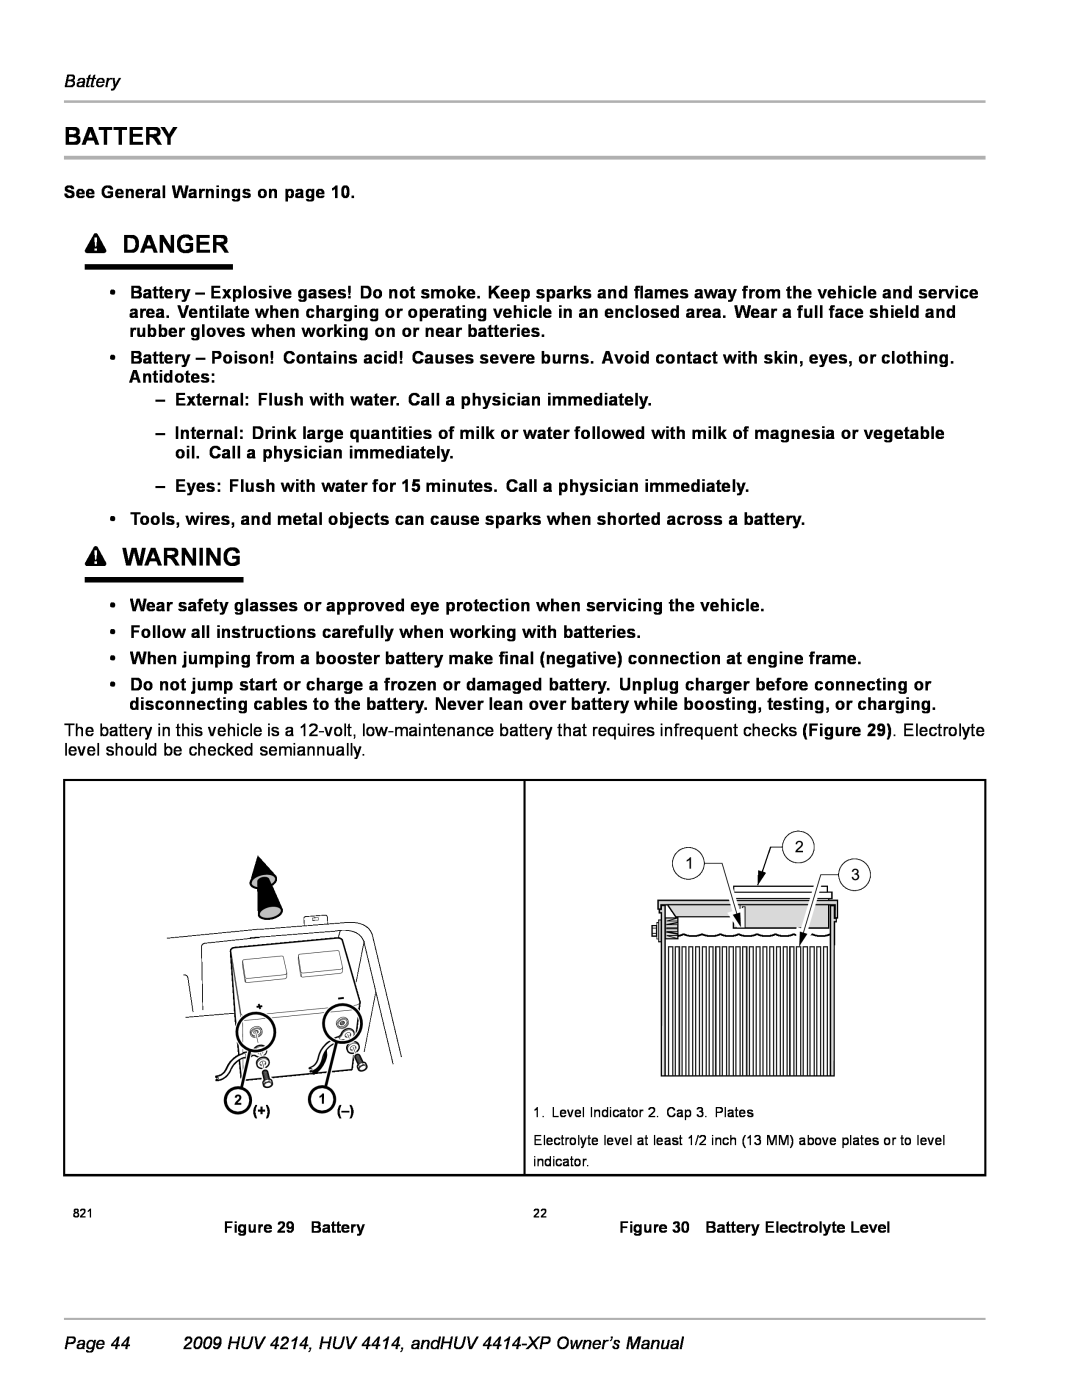 Husqvarna Page 44 2009 HUV 4214, HUV 4414, andHUV 4414-XP Owner’s Manual, Danger, Battery Electrolyte Level 